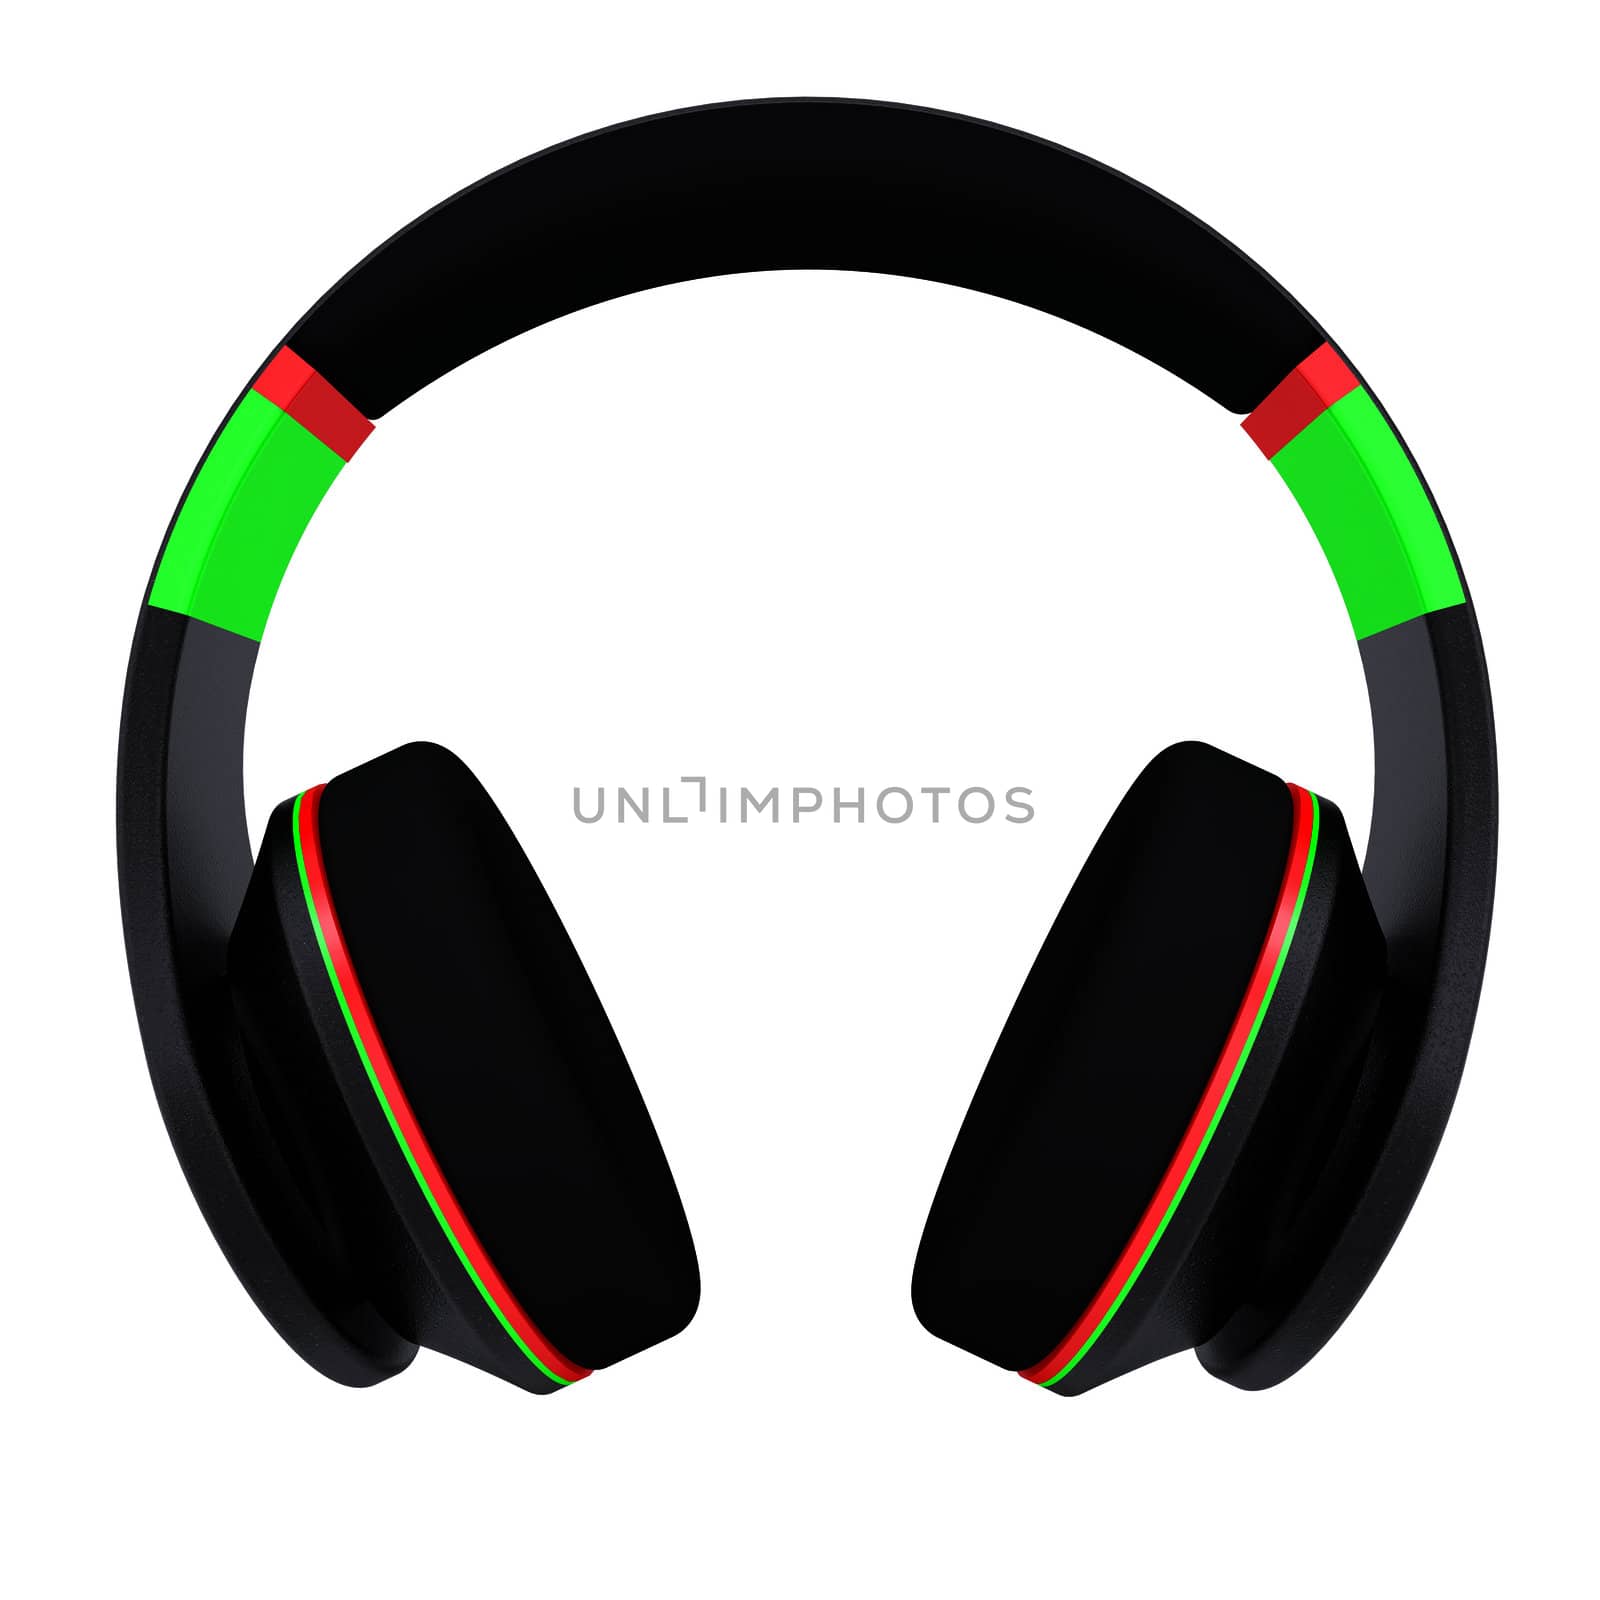 Stylish black headphones. Isolated render on a white background